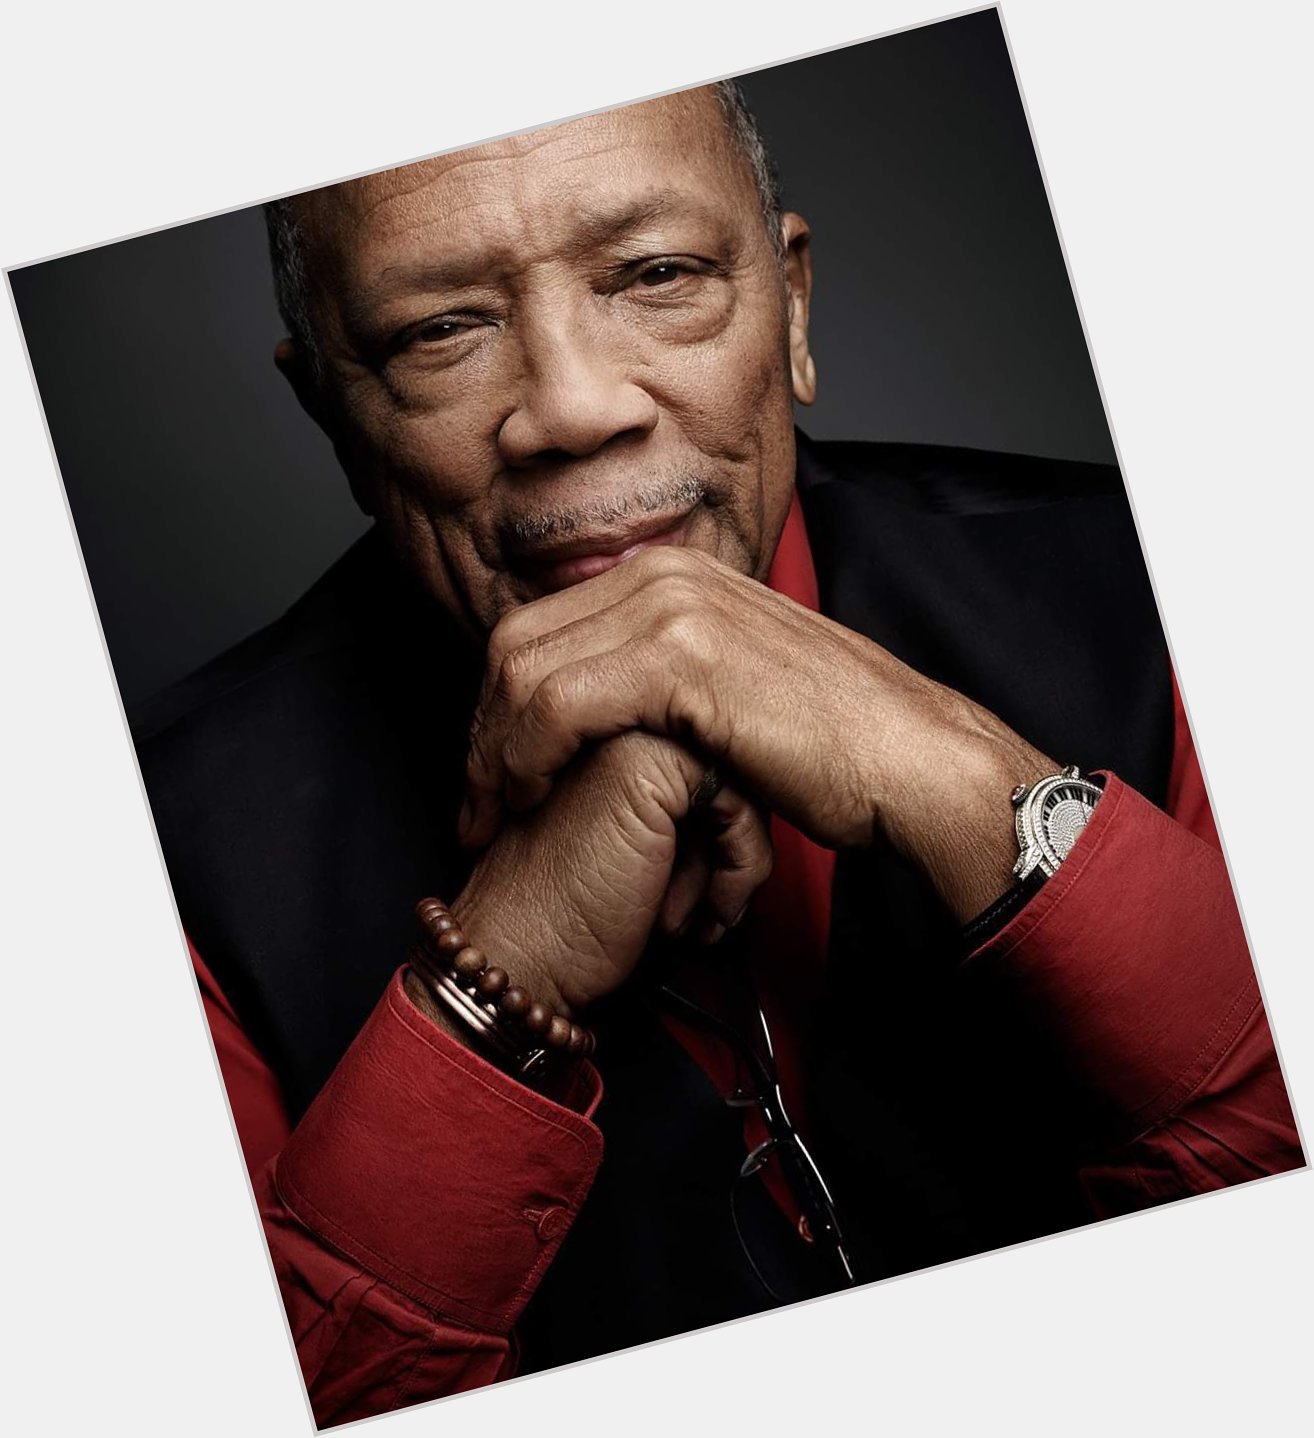 Happy birthday to Quincy Jones!
89 years of pure magic!! 